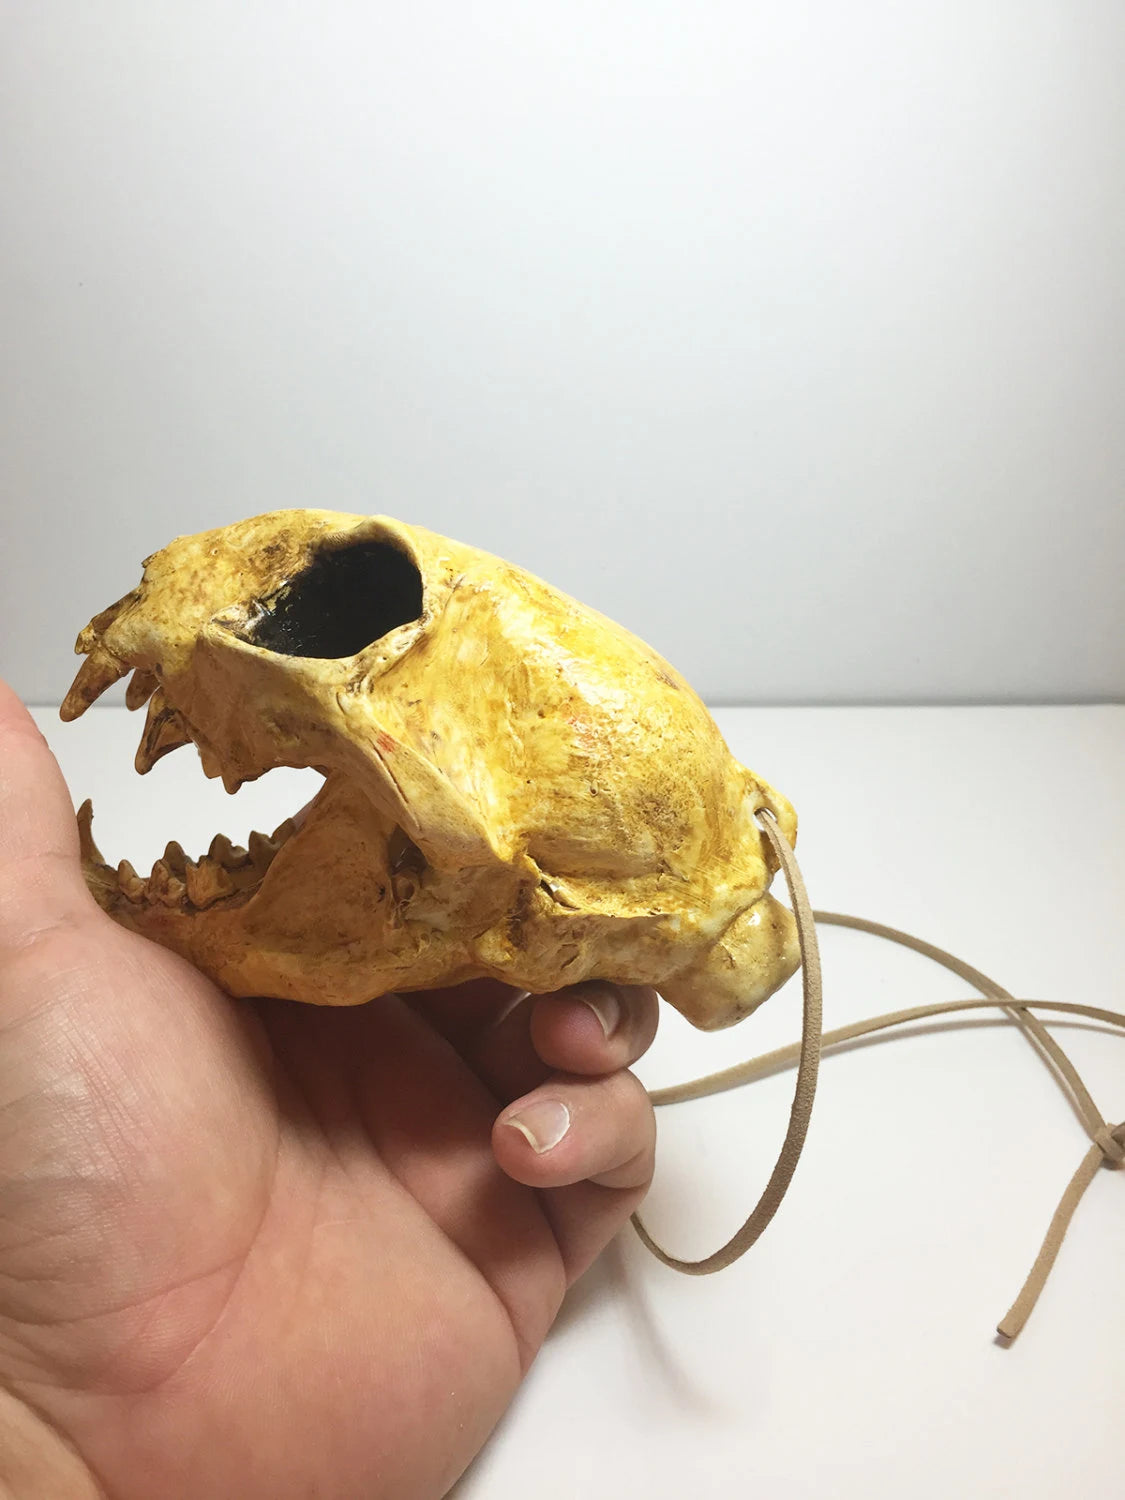 Aztec Death Whistle - the Apex Predator